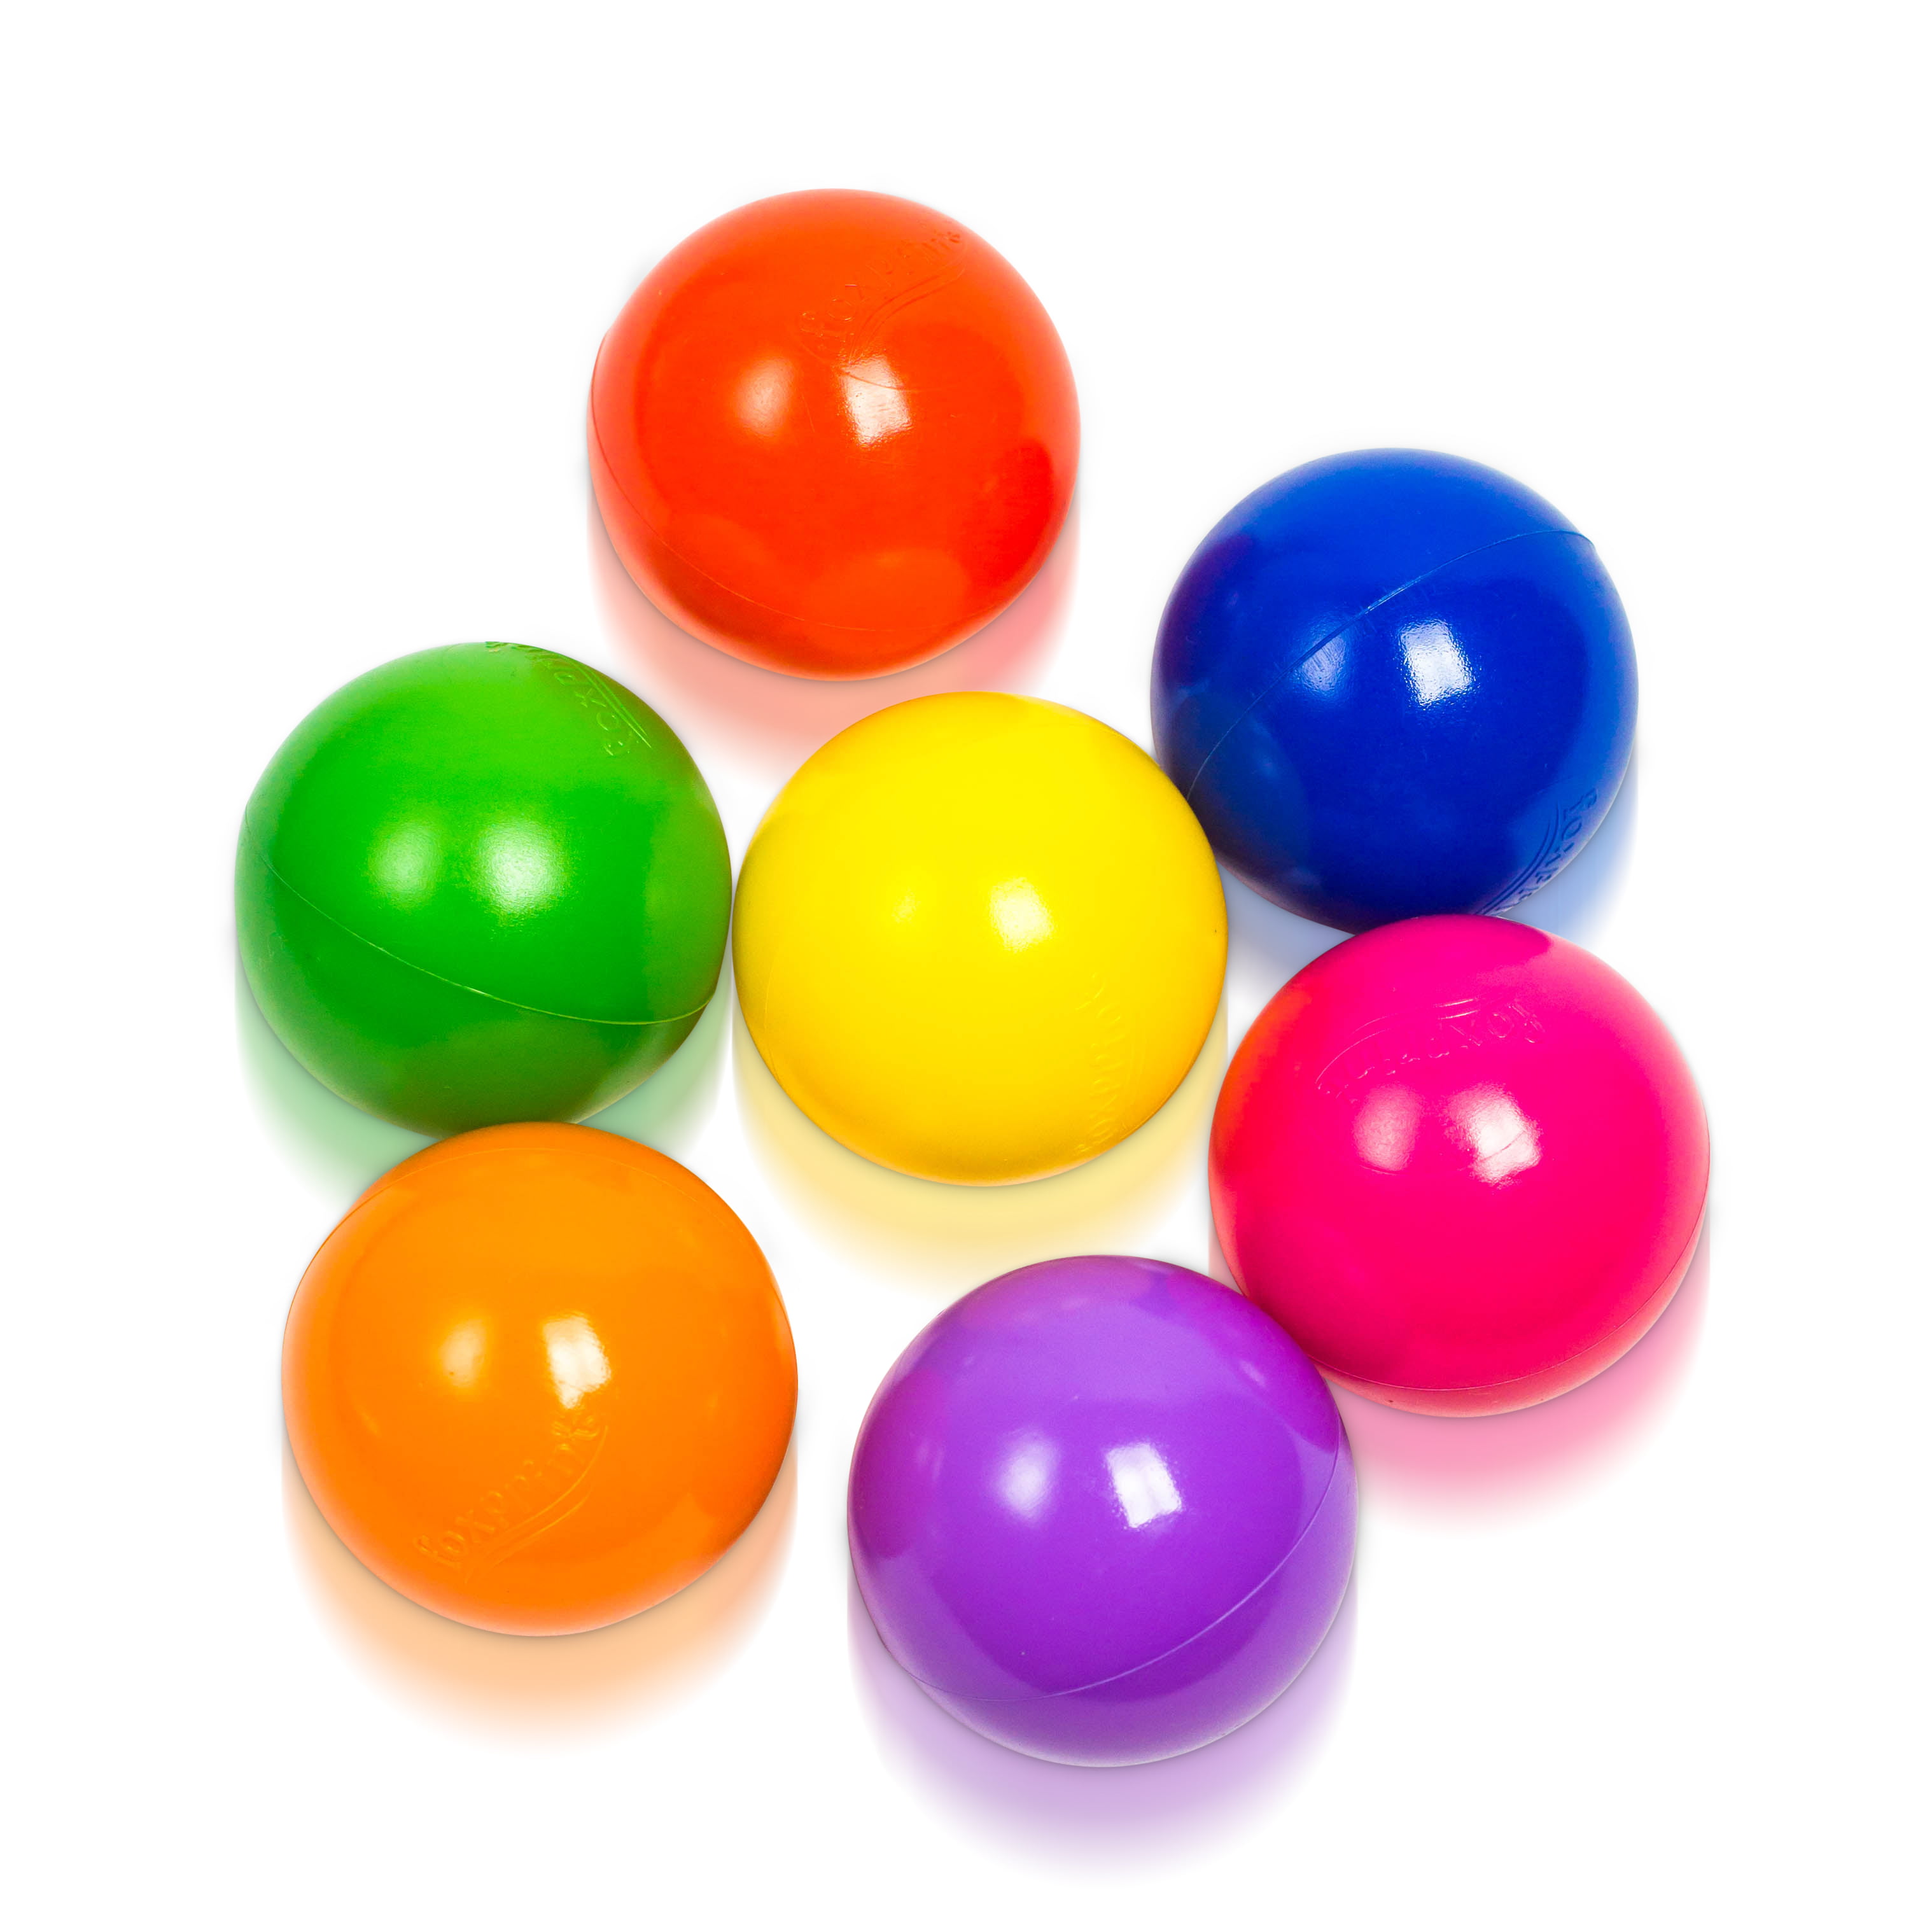 Soft Plastic Kids Play Balls for Ball Pit, Kiddie Pool, Playpen – 50 Balls